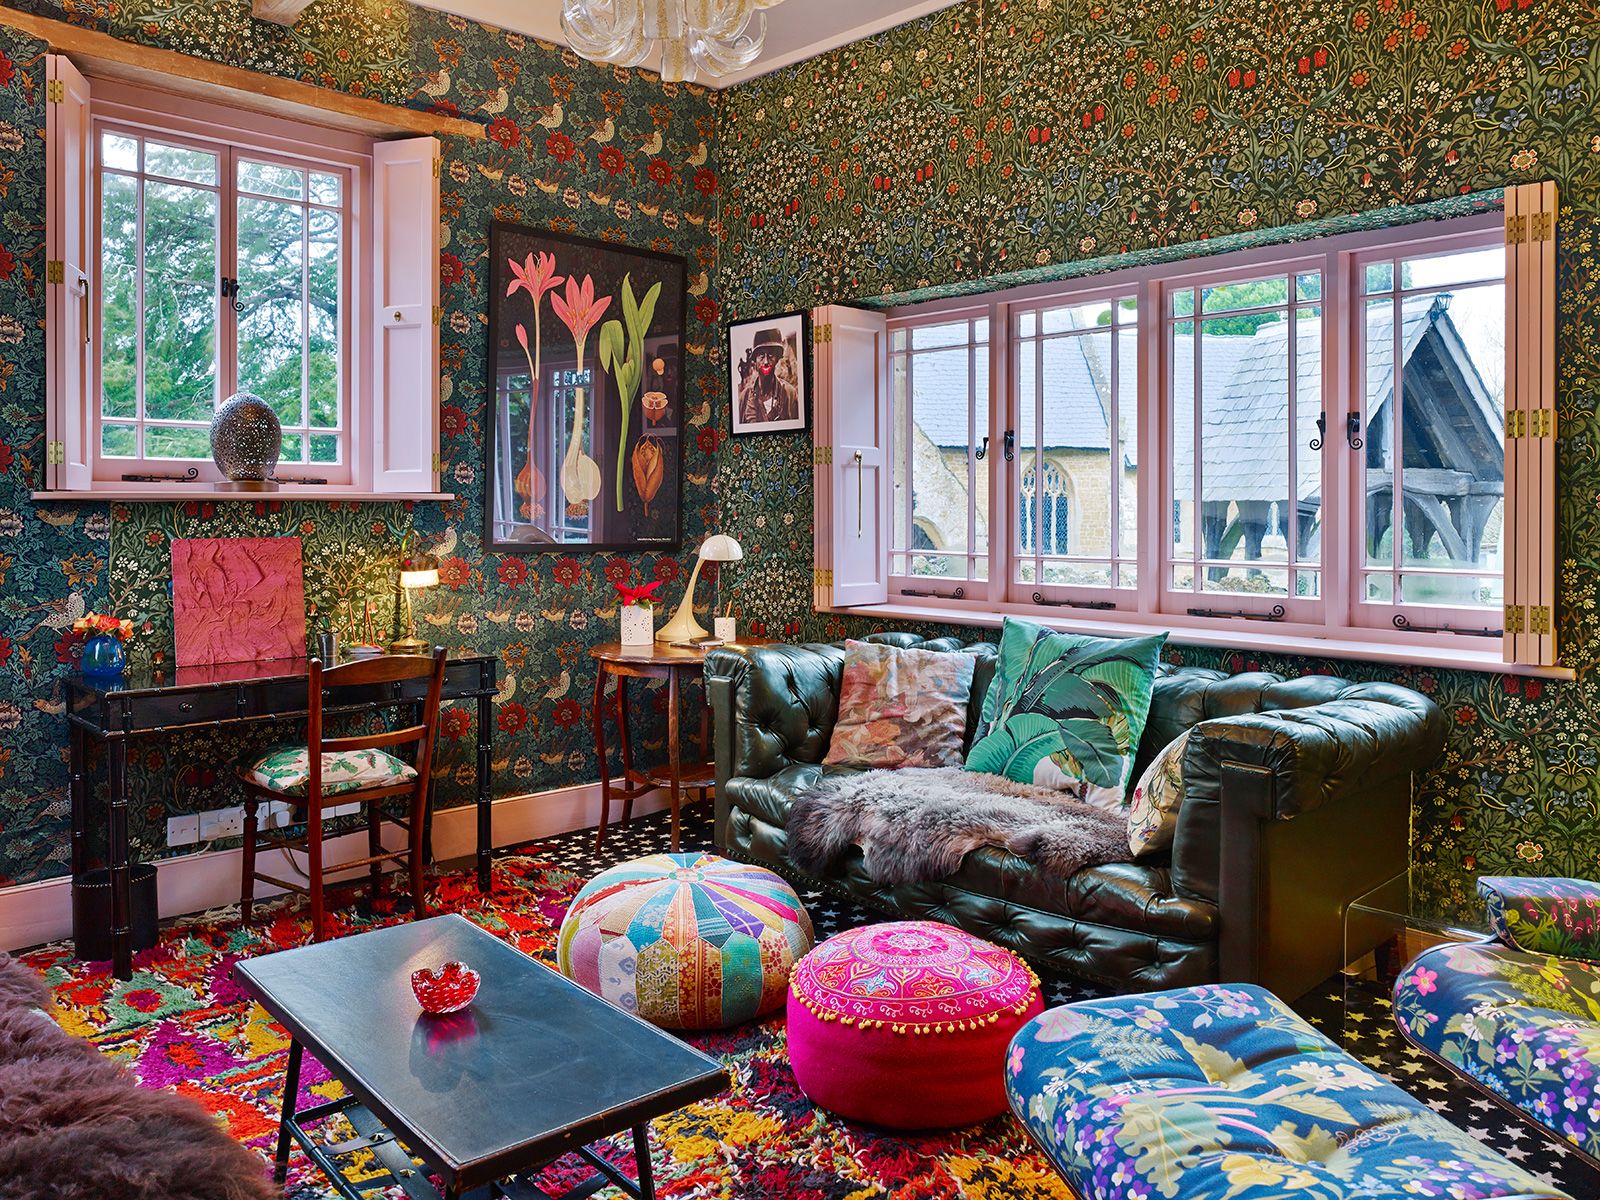 Maximalism home decor ideas that prove more is more - Coaste